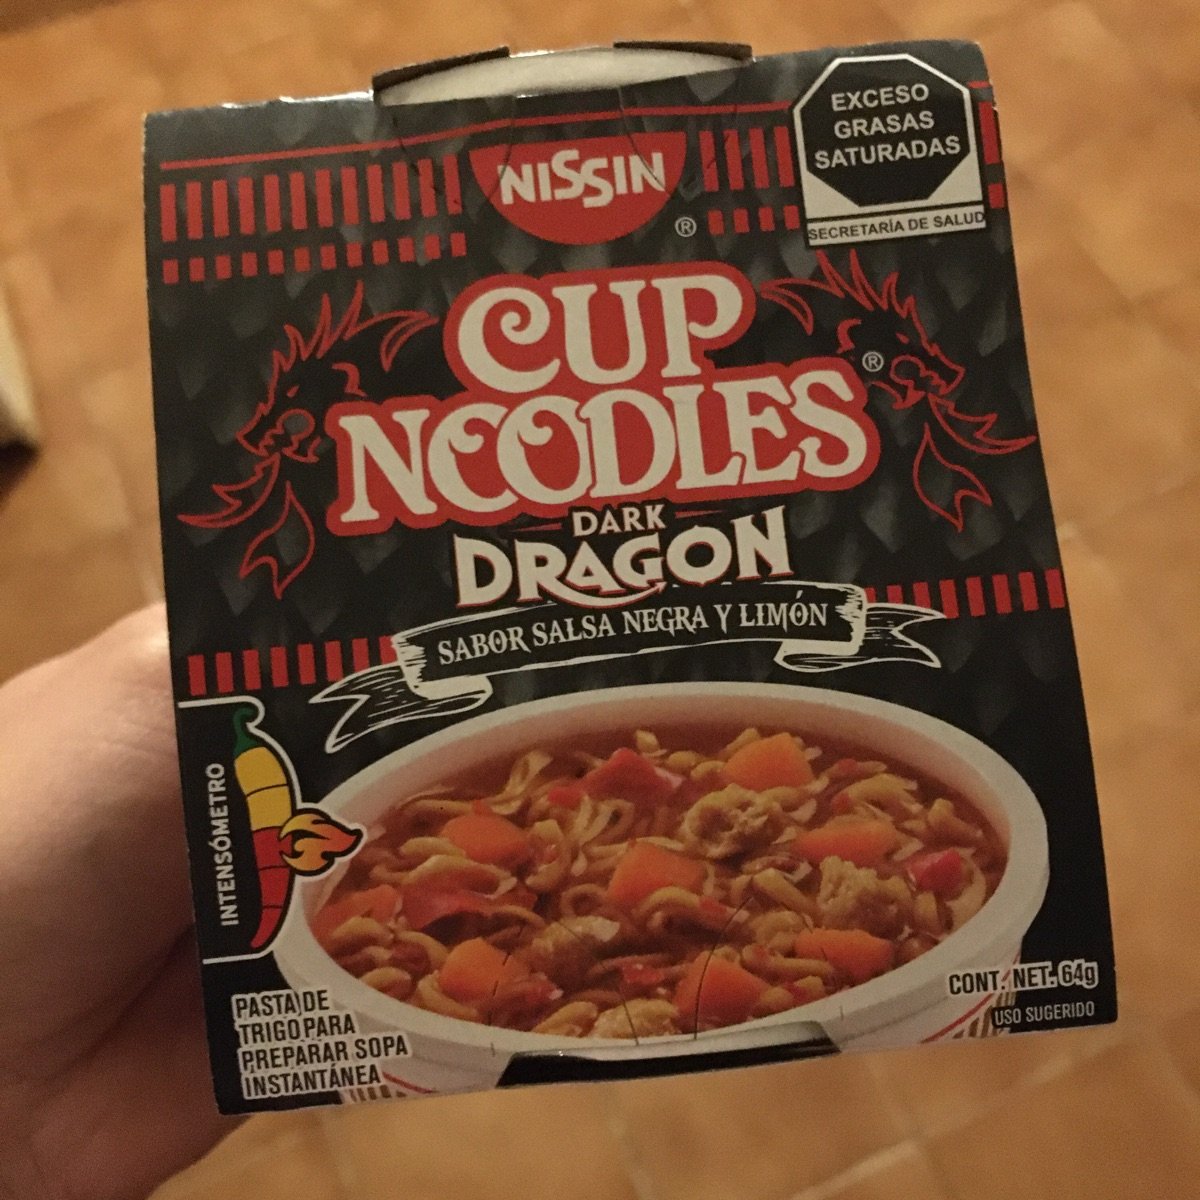 Nissin Cup noodles Dragon Review